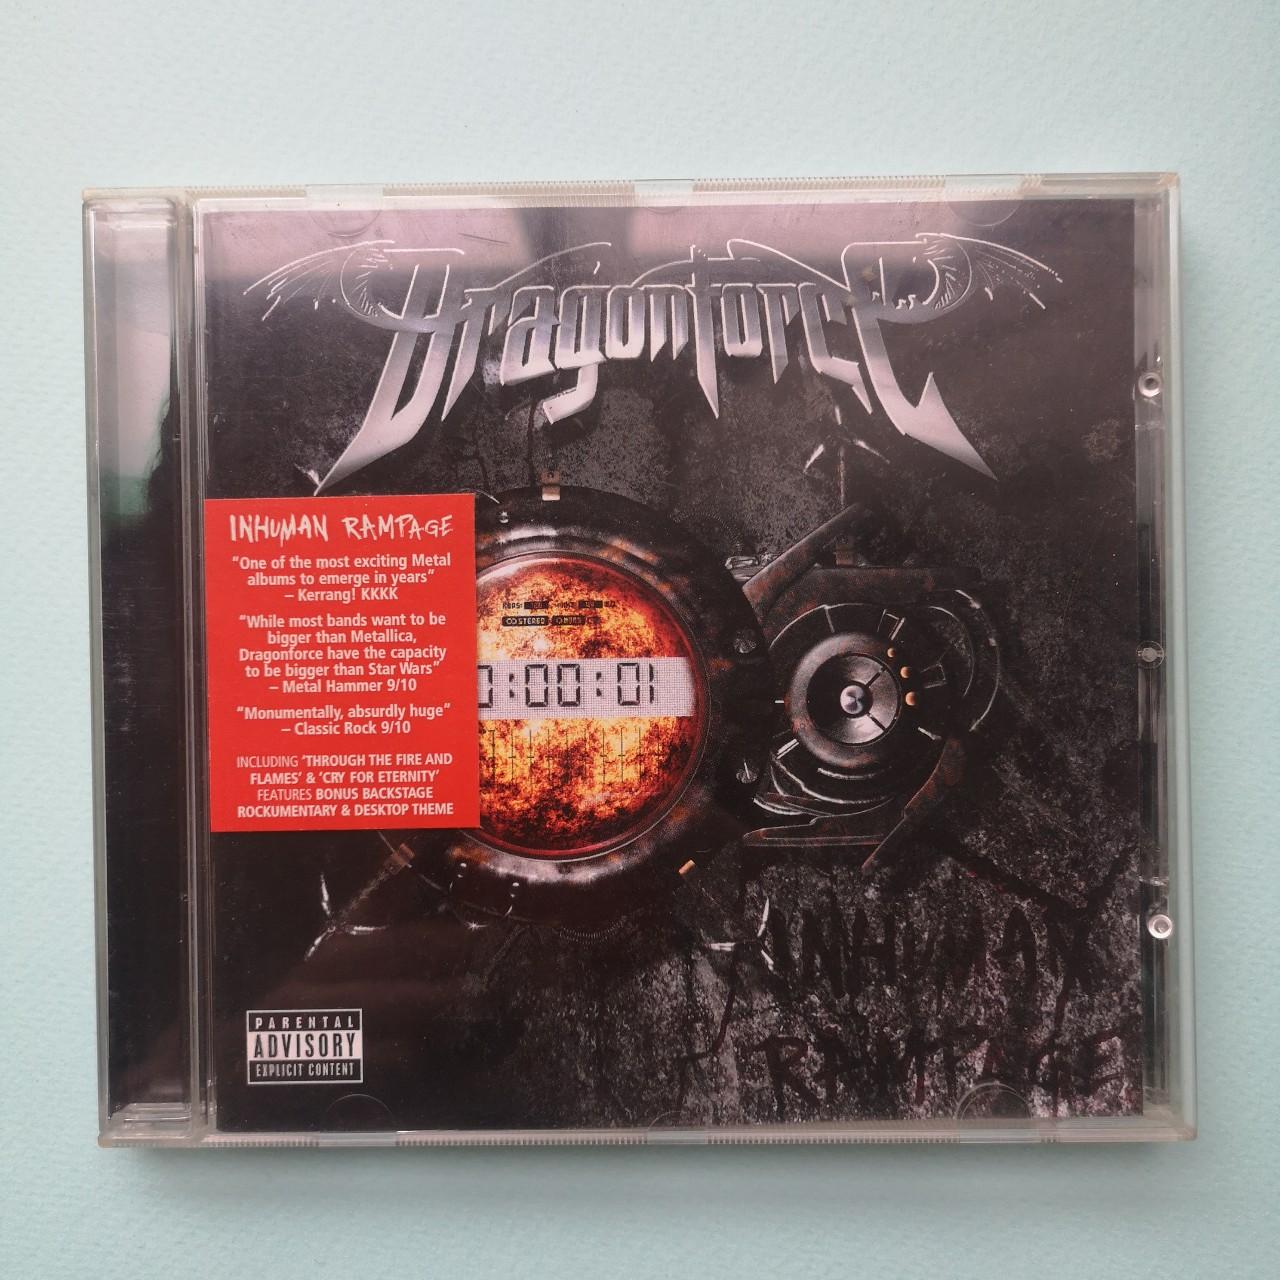 Dragonforce - Inhuman Rampage - CD on Roadrunner... - Depop